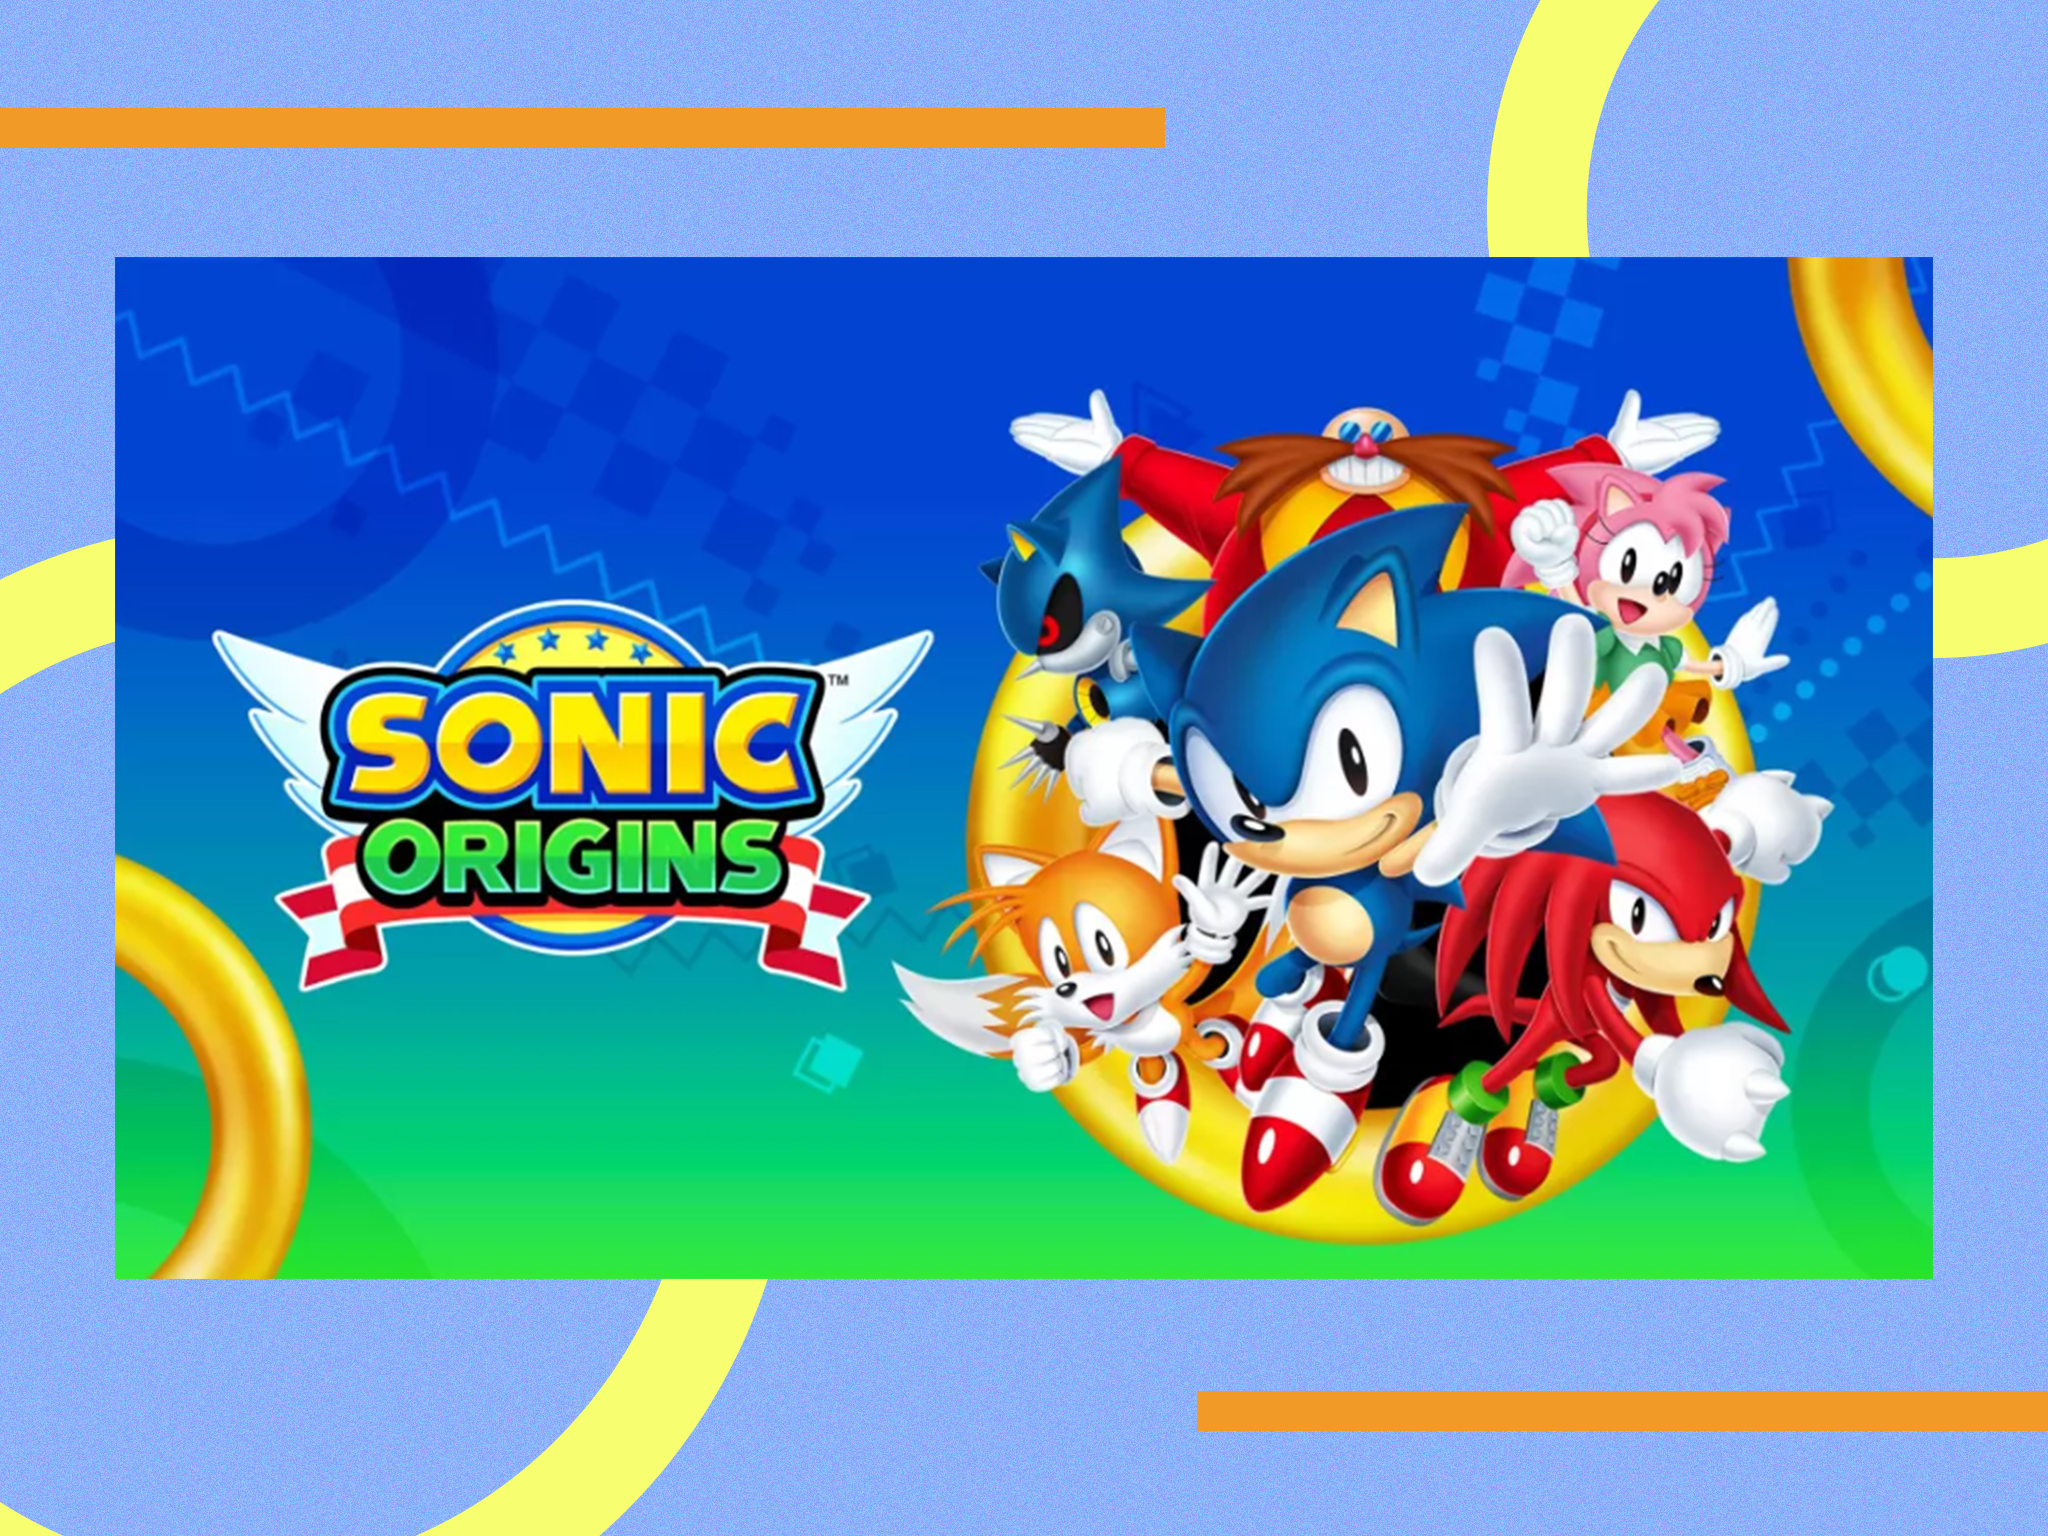 Sonic Origins is scheduled to release on 23 June 2022